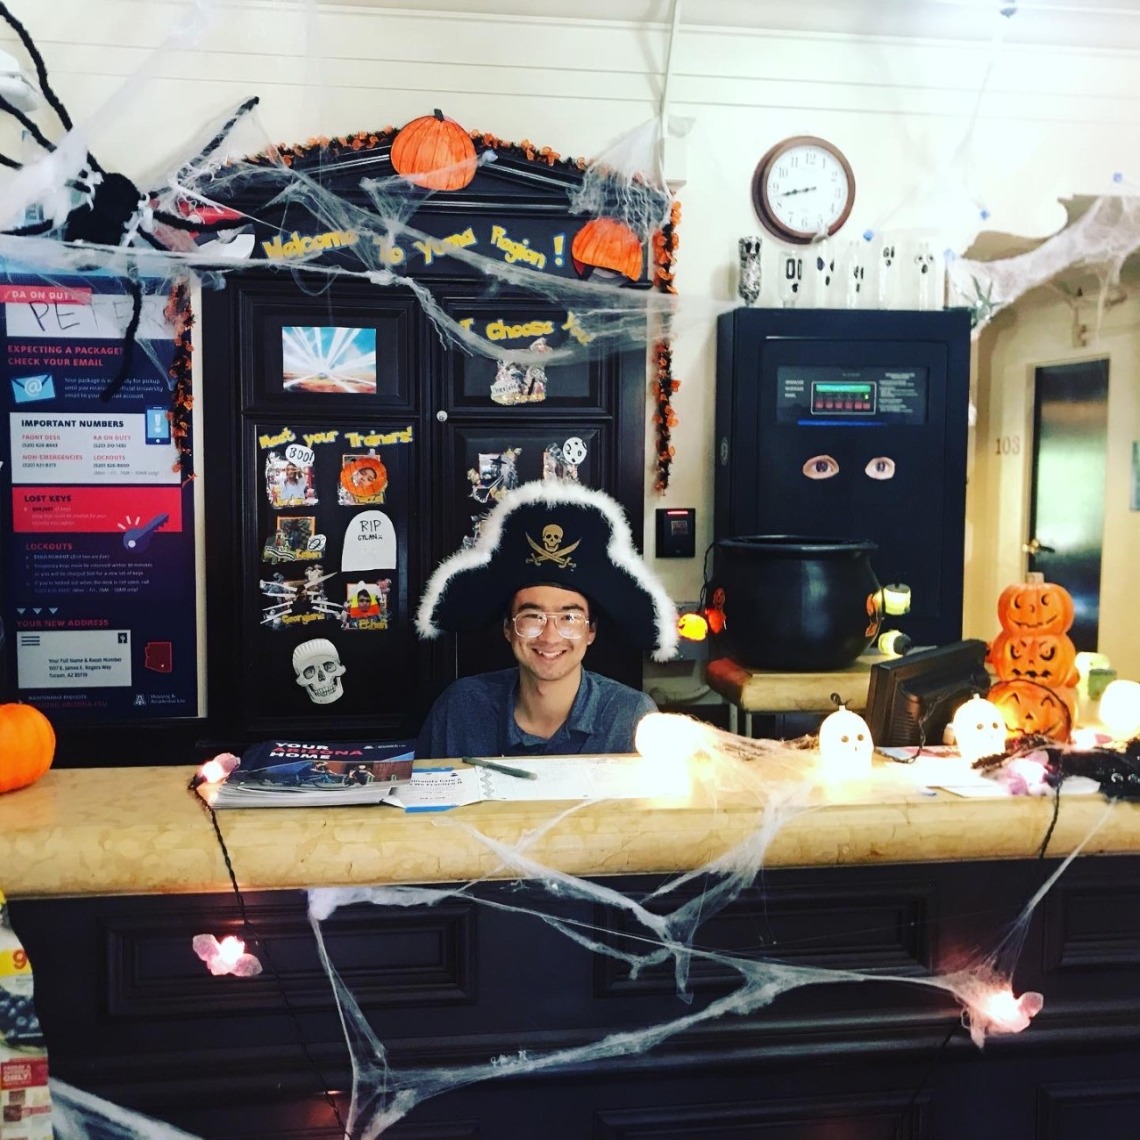 Desk Assistant dressed as pirate on Halloween behind dorm front desk.